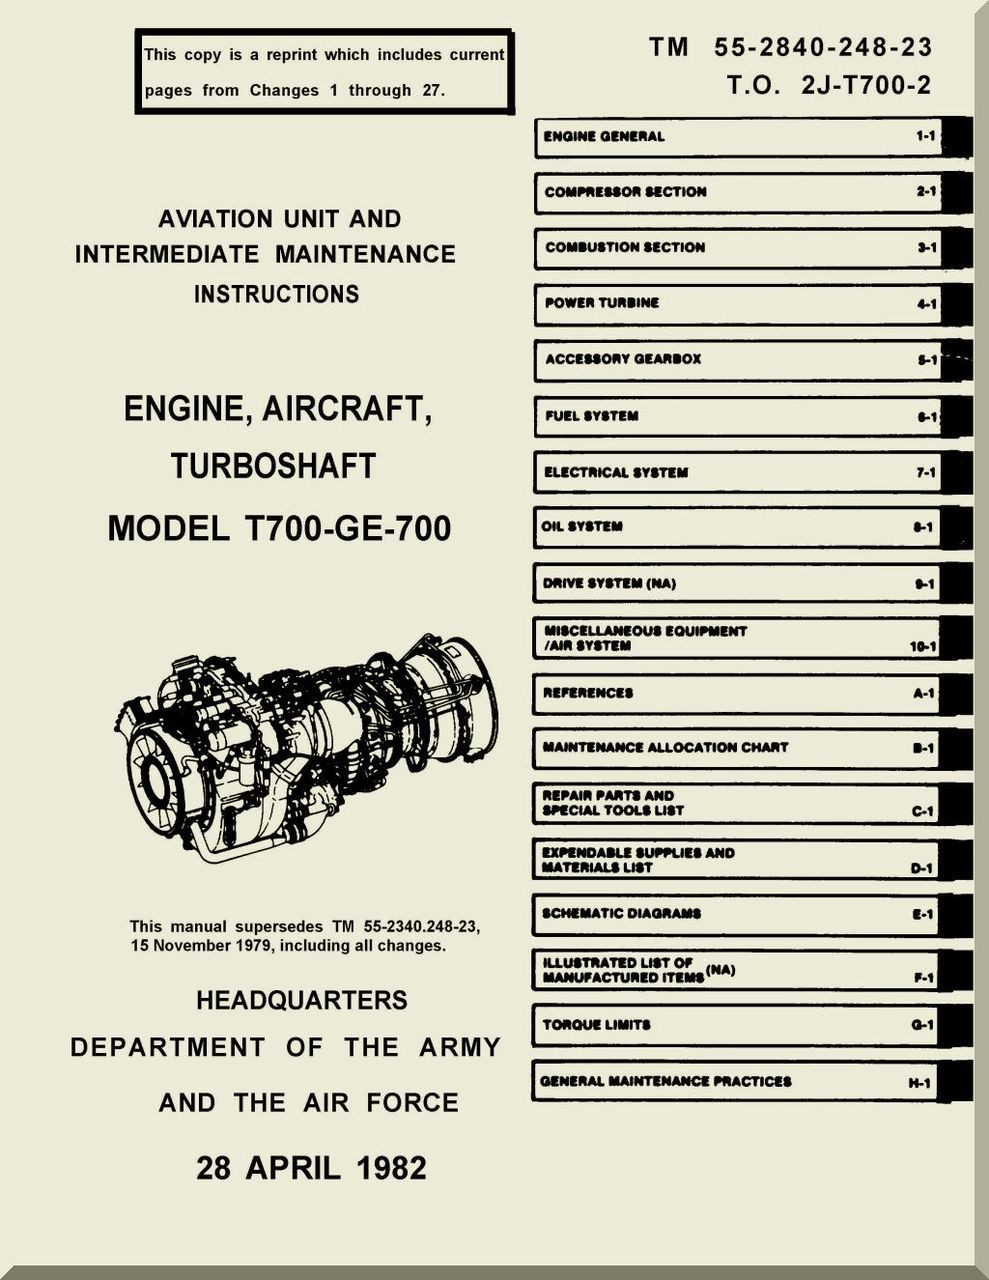 Ge T 700 Ge 700 Aircraft Turbo Shaft Engine Intermediate Maintenance Manual 2j T700 2 Aircraft Reports Aircraft Manuals Aircraft Helicopter Engines Propellers Blueprints Publications